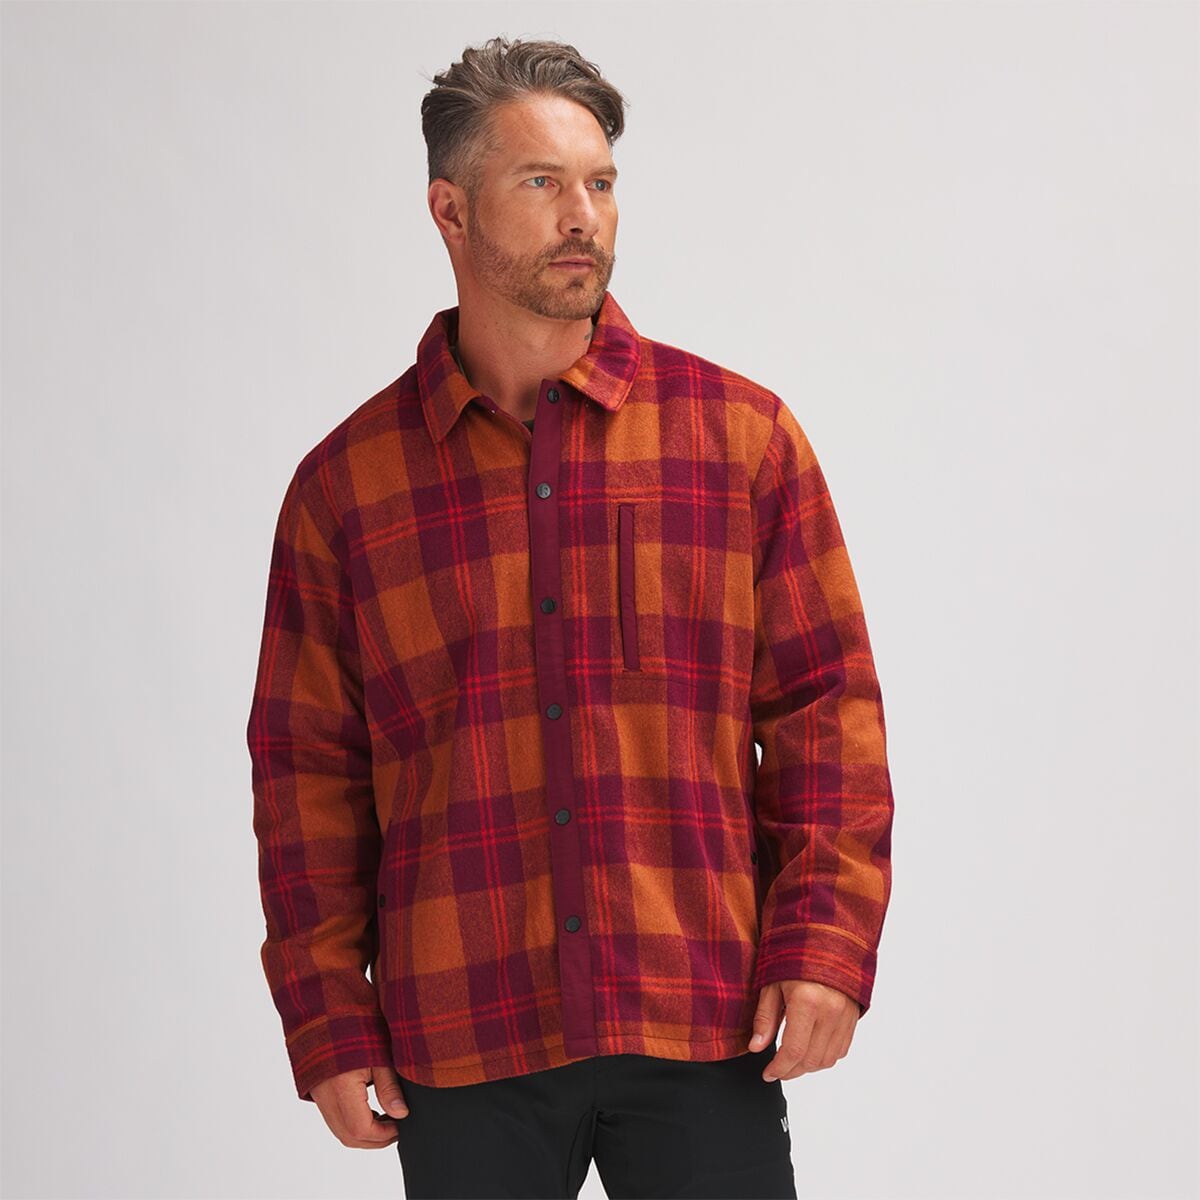 Backcountry Heavyweight Flannel Shirt Jacket - Men's